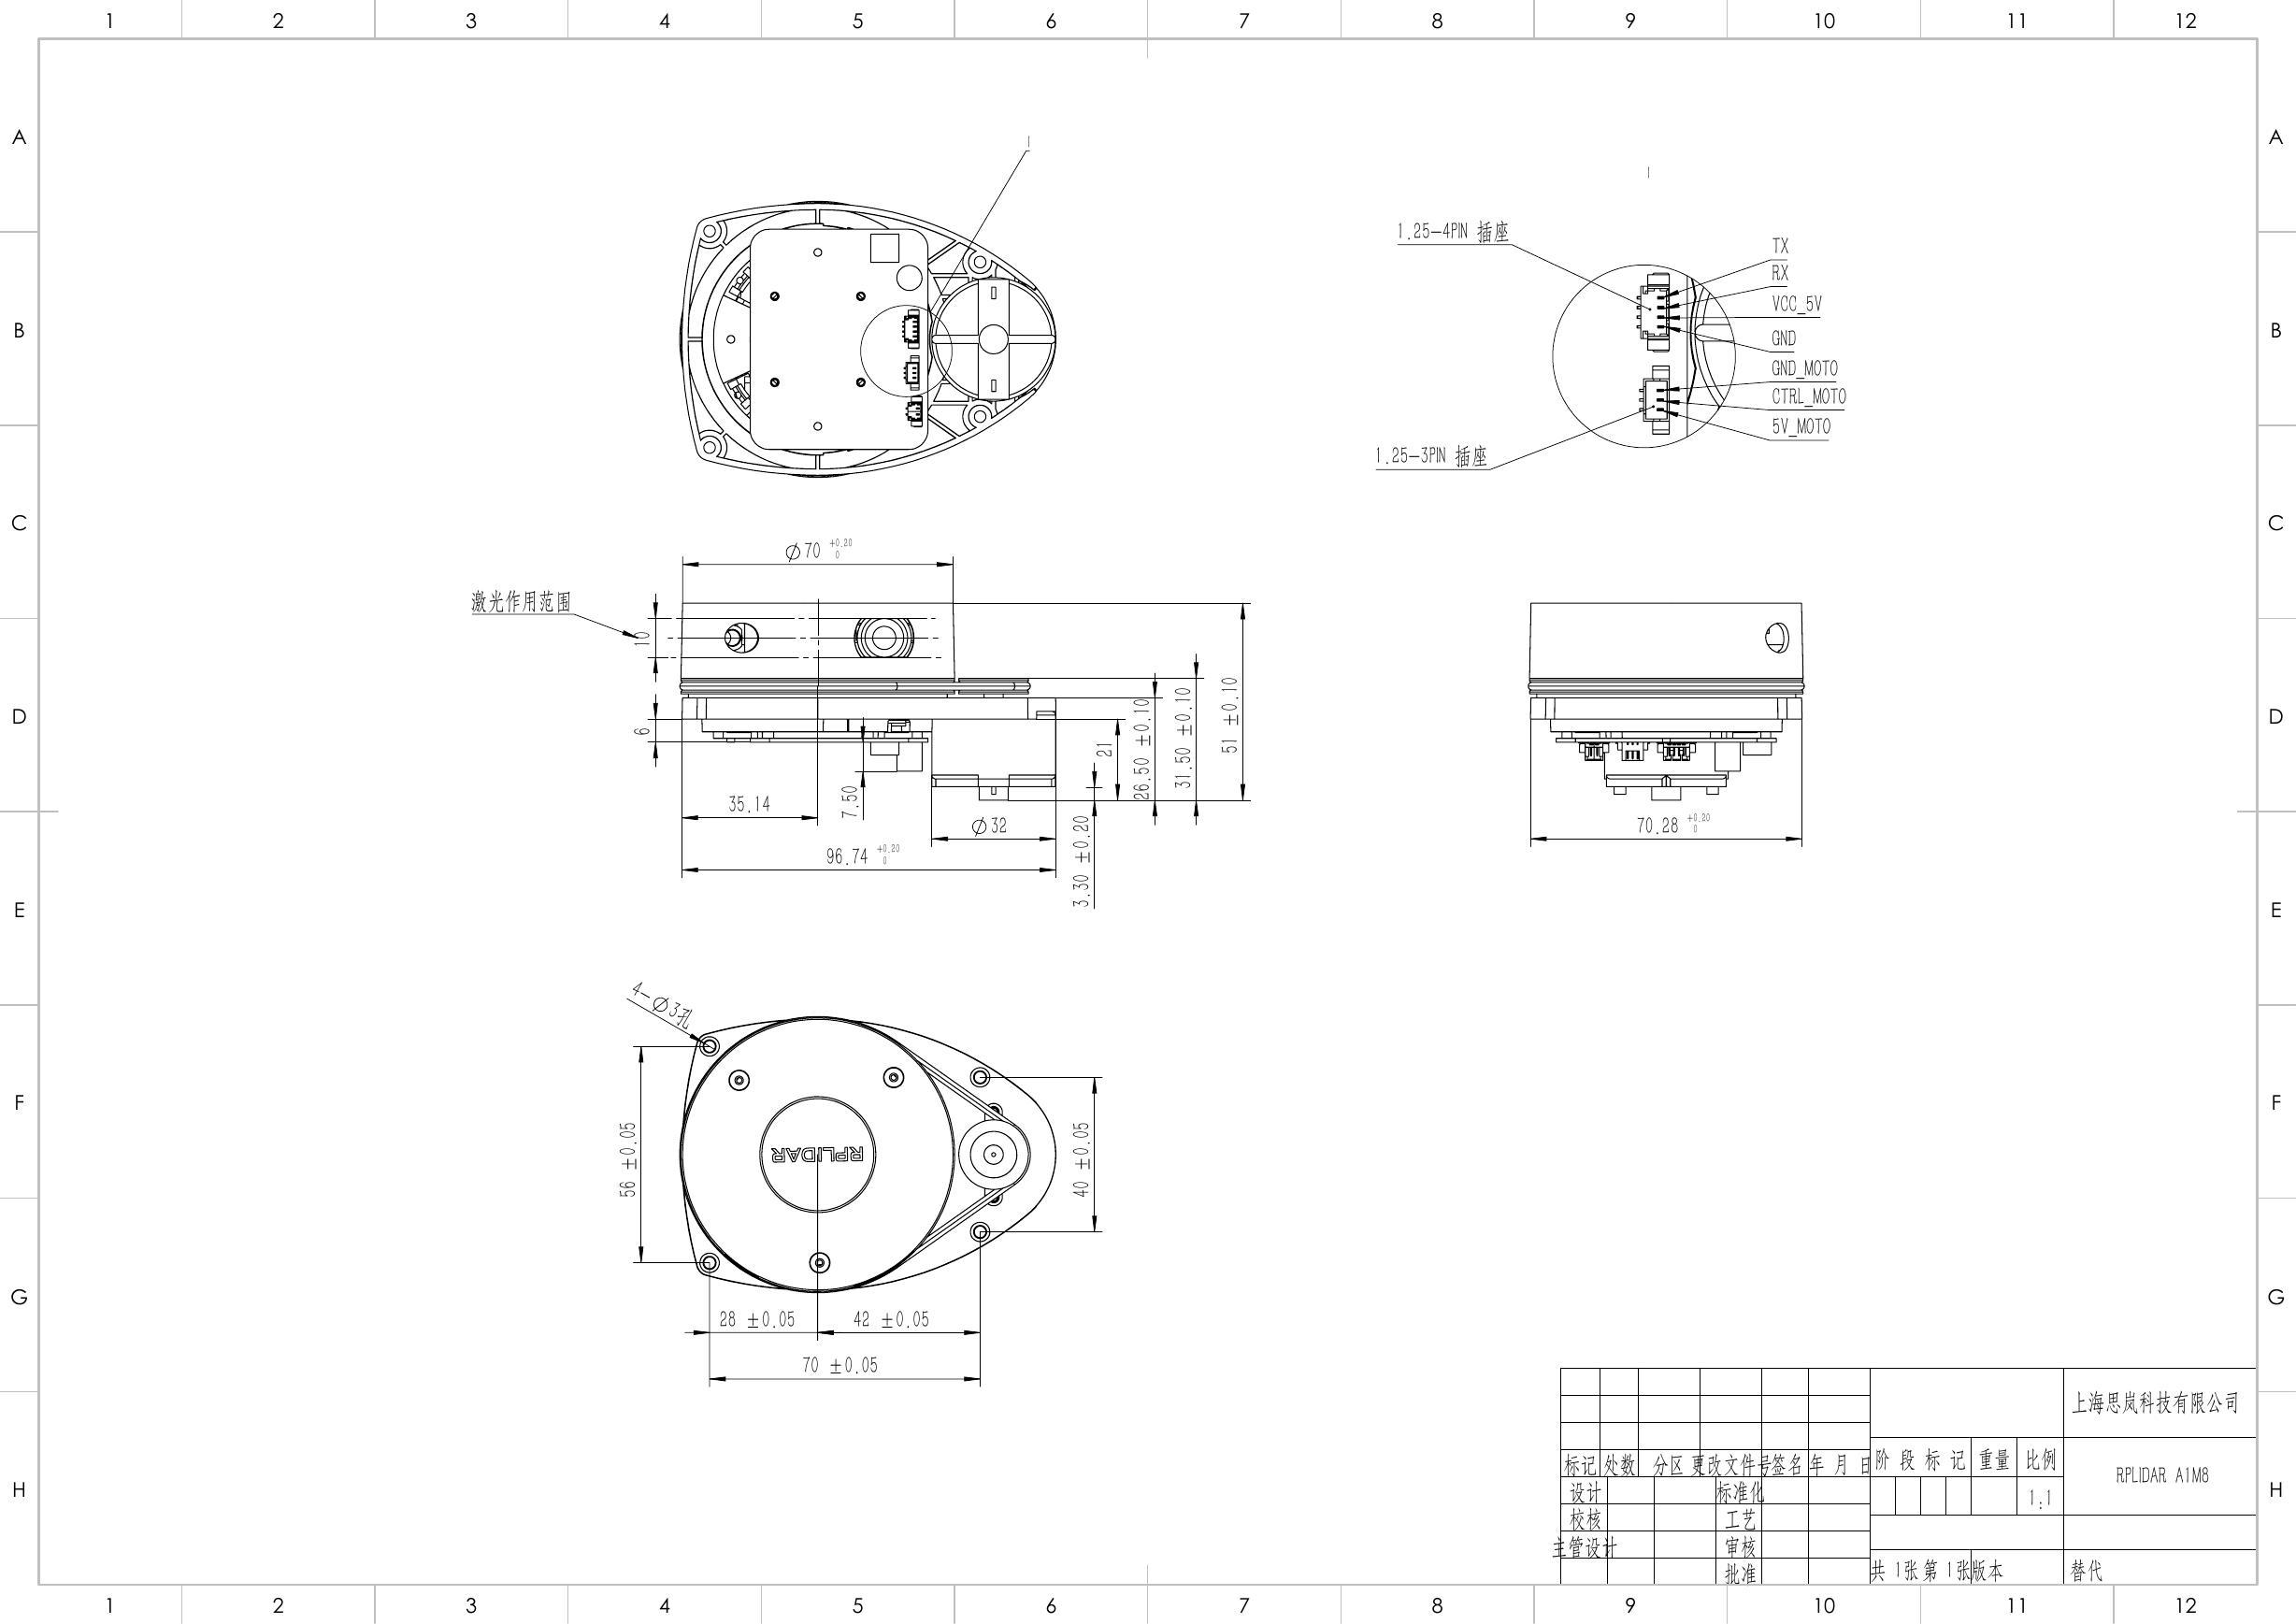 RPLIDAR_A1M8 2D图纸(文件:RPLIDAR_2D_A1M8).pdf